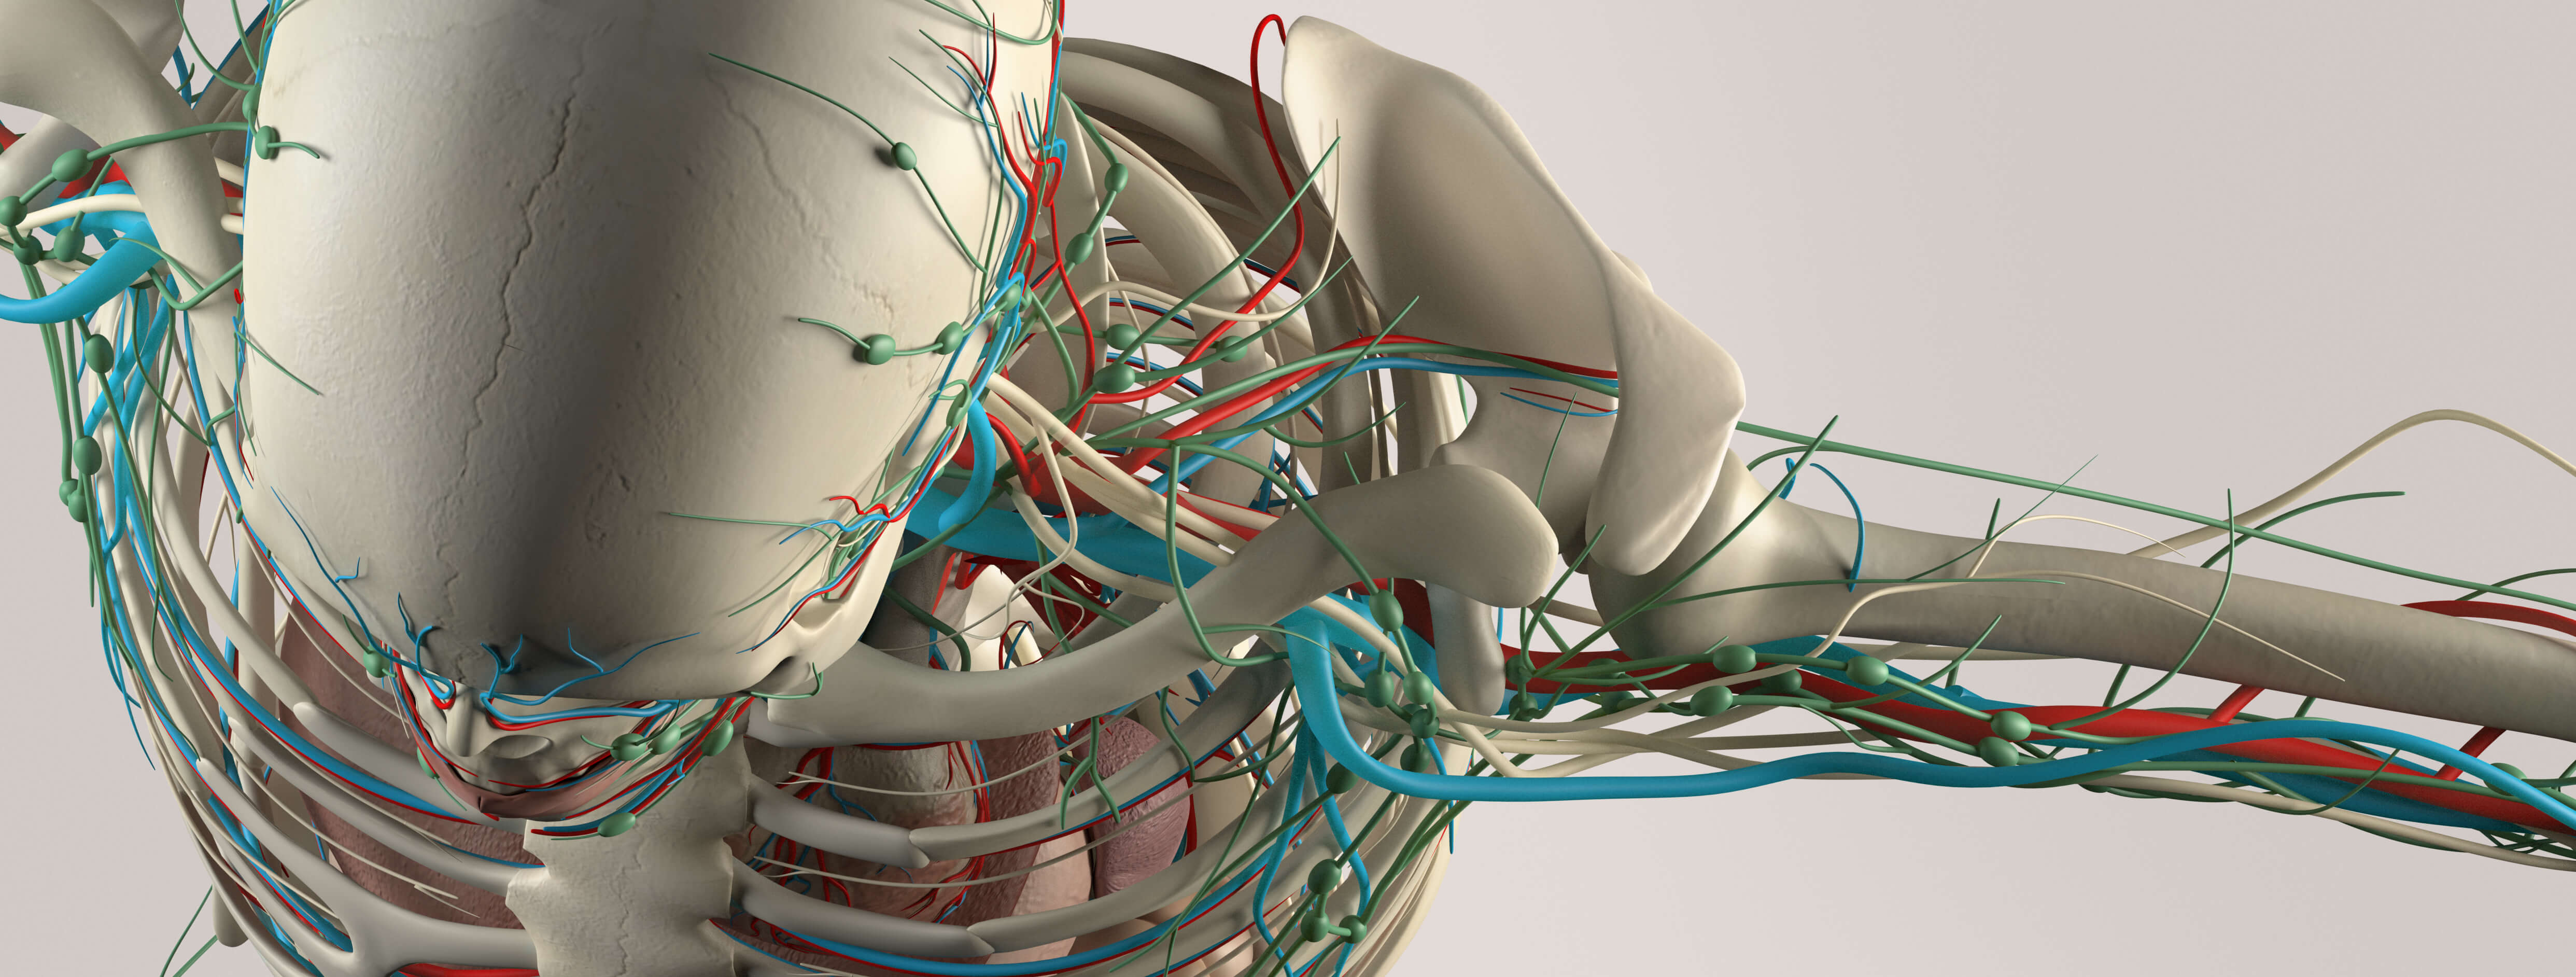 Ulnar Nerve Anatomy & Function